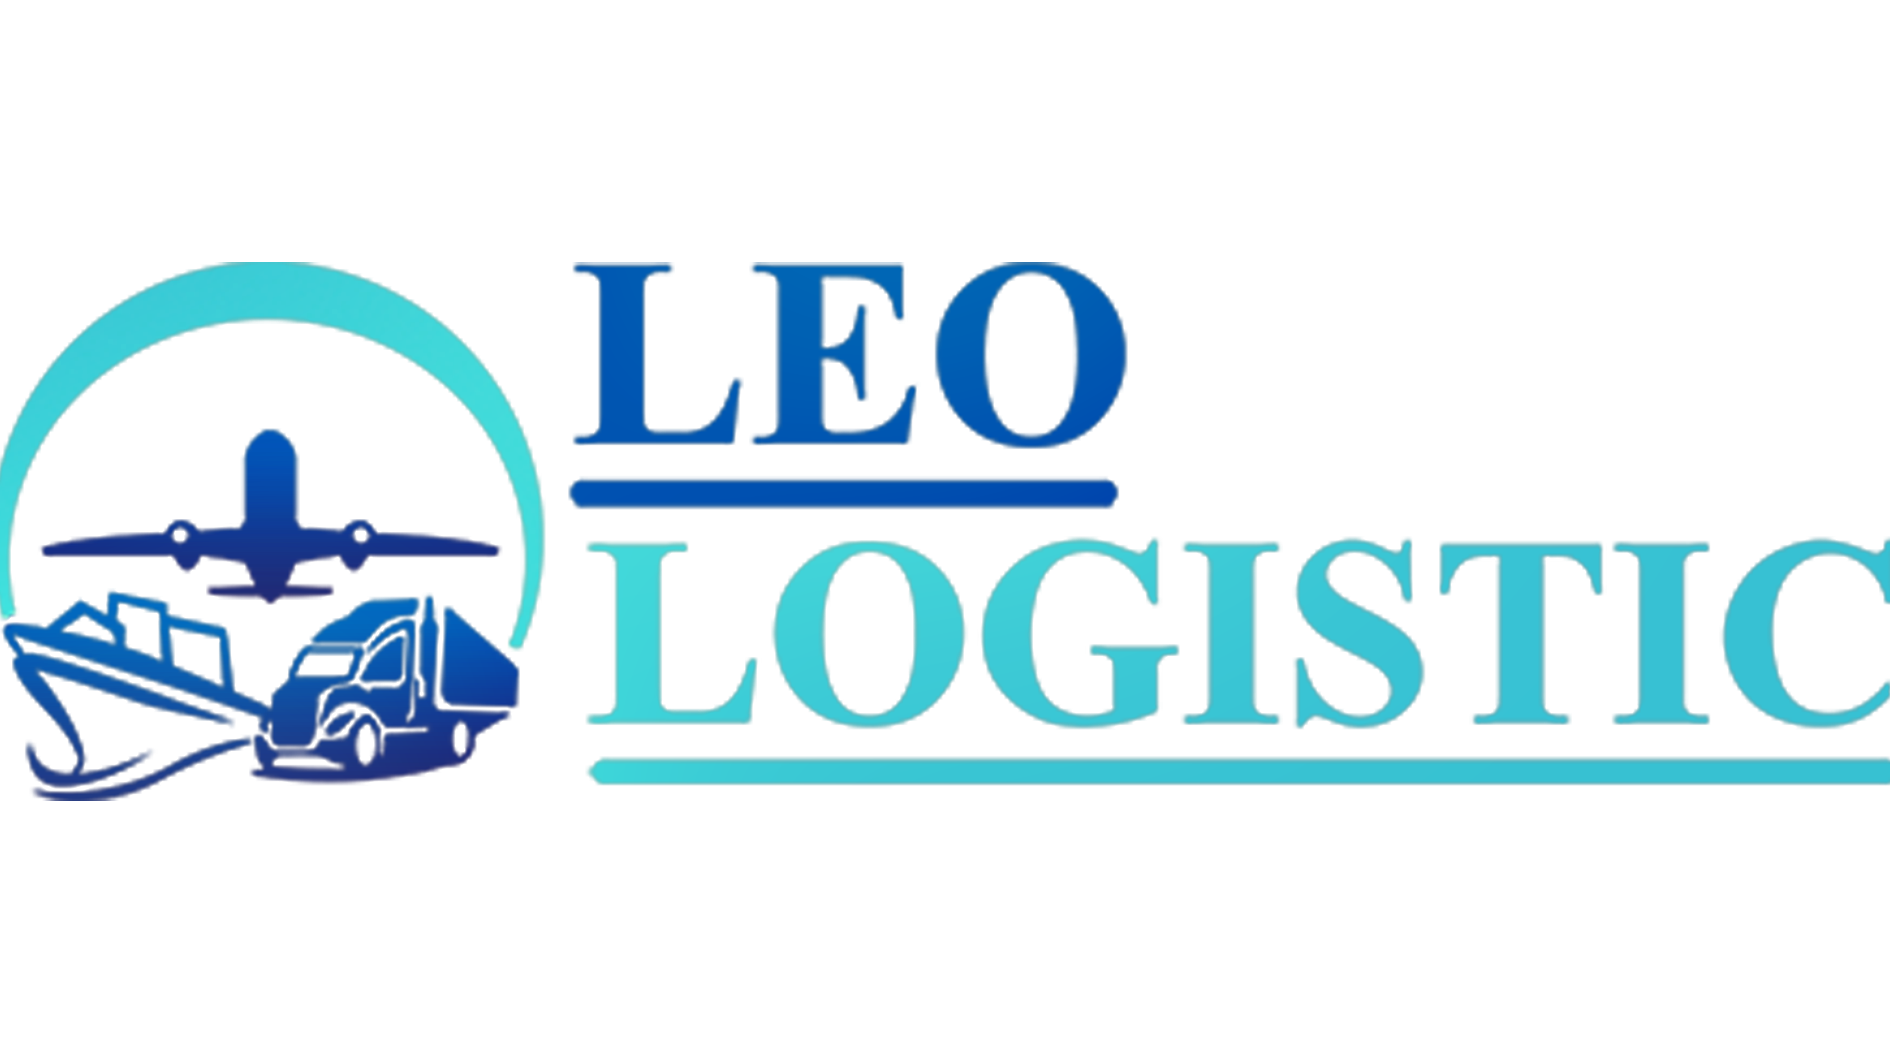 Leo Logistic - Avusturya